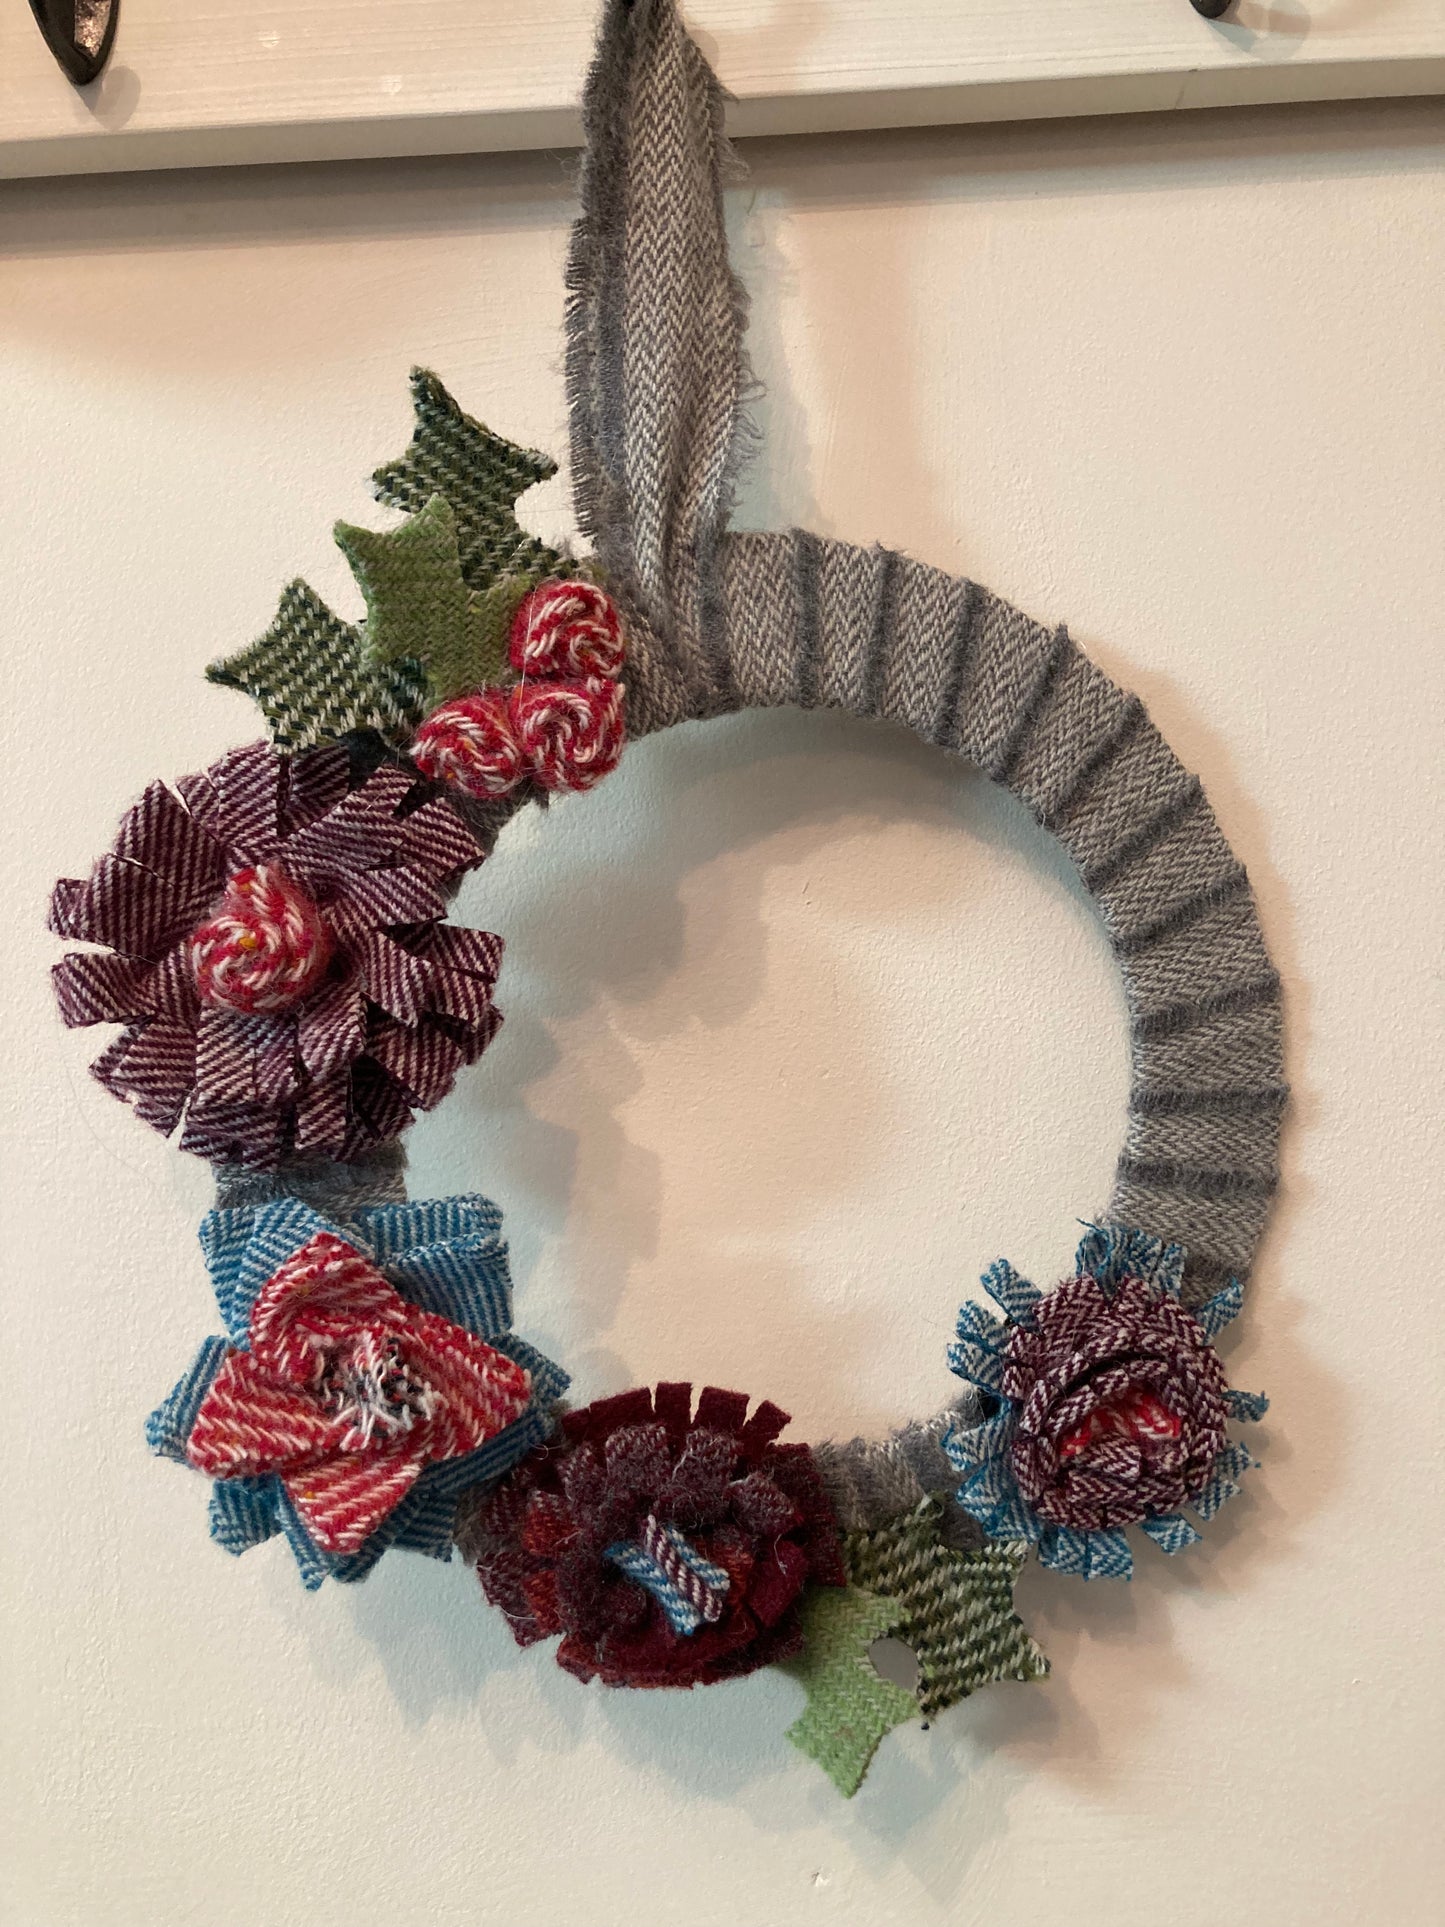 Tweed flower festive wreath